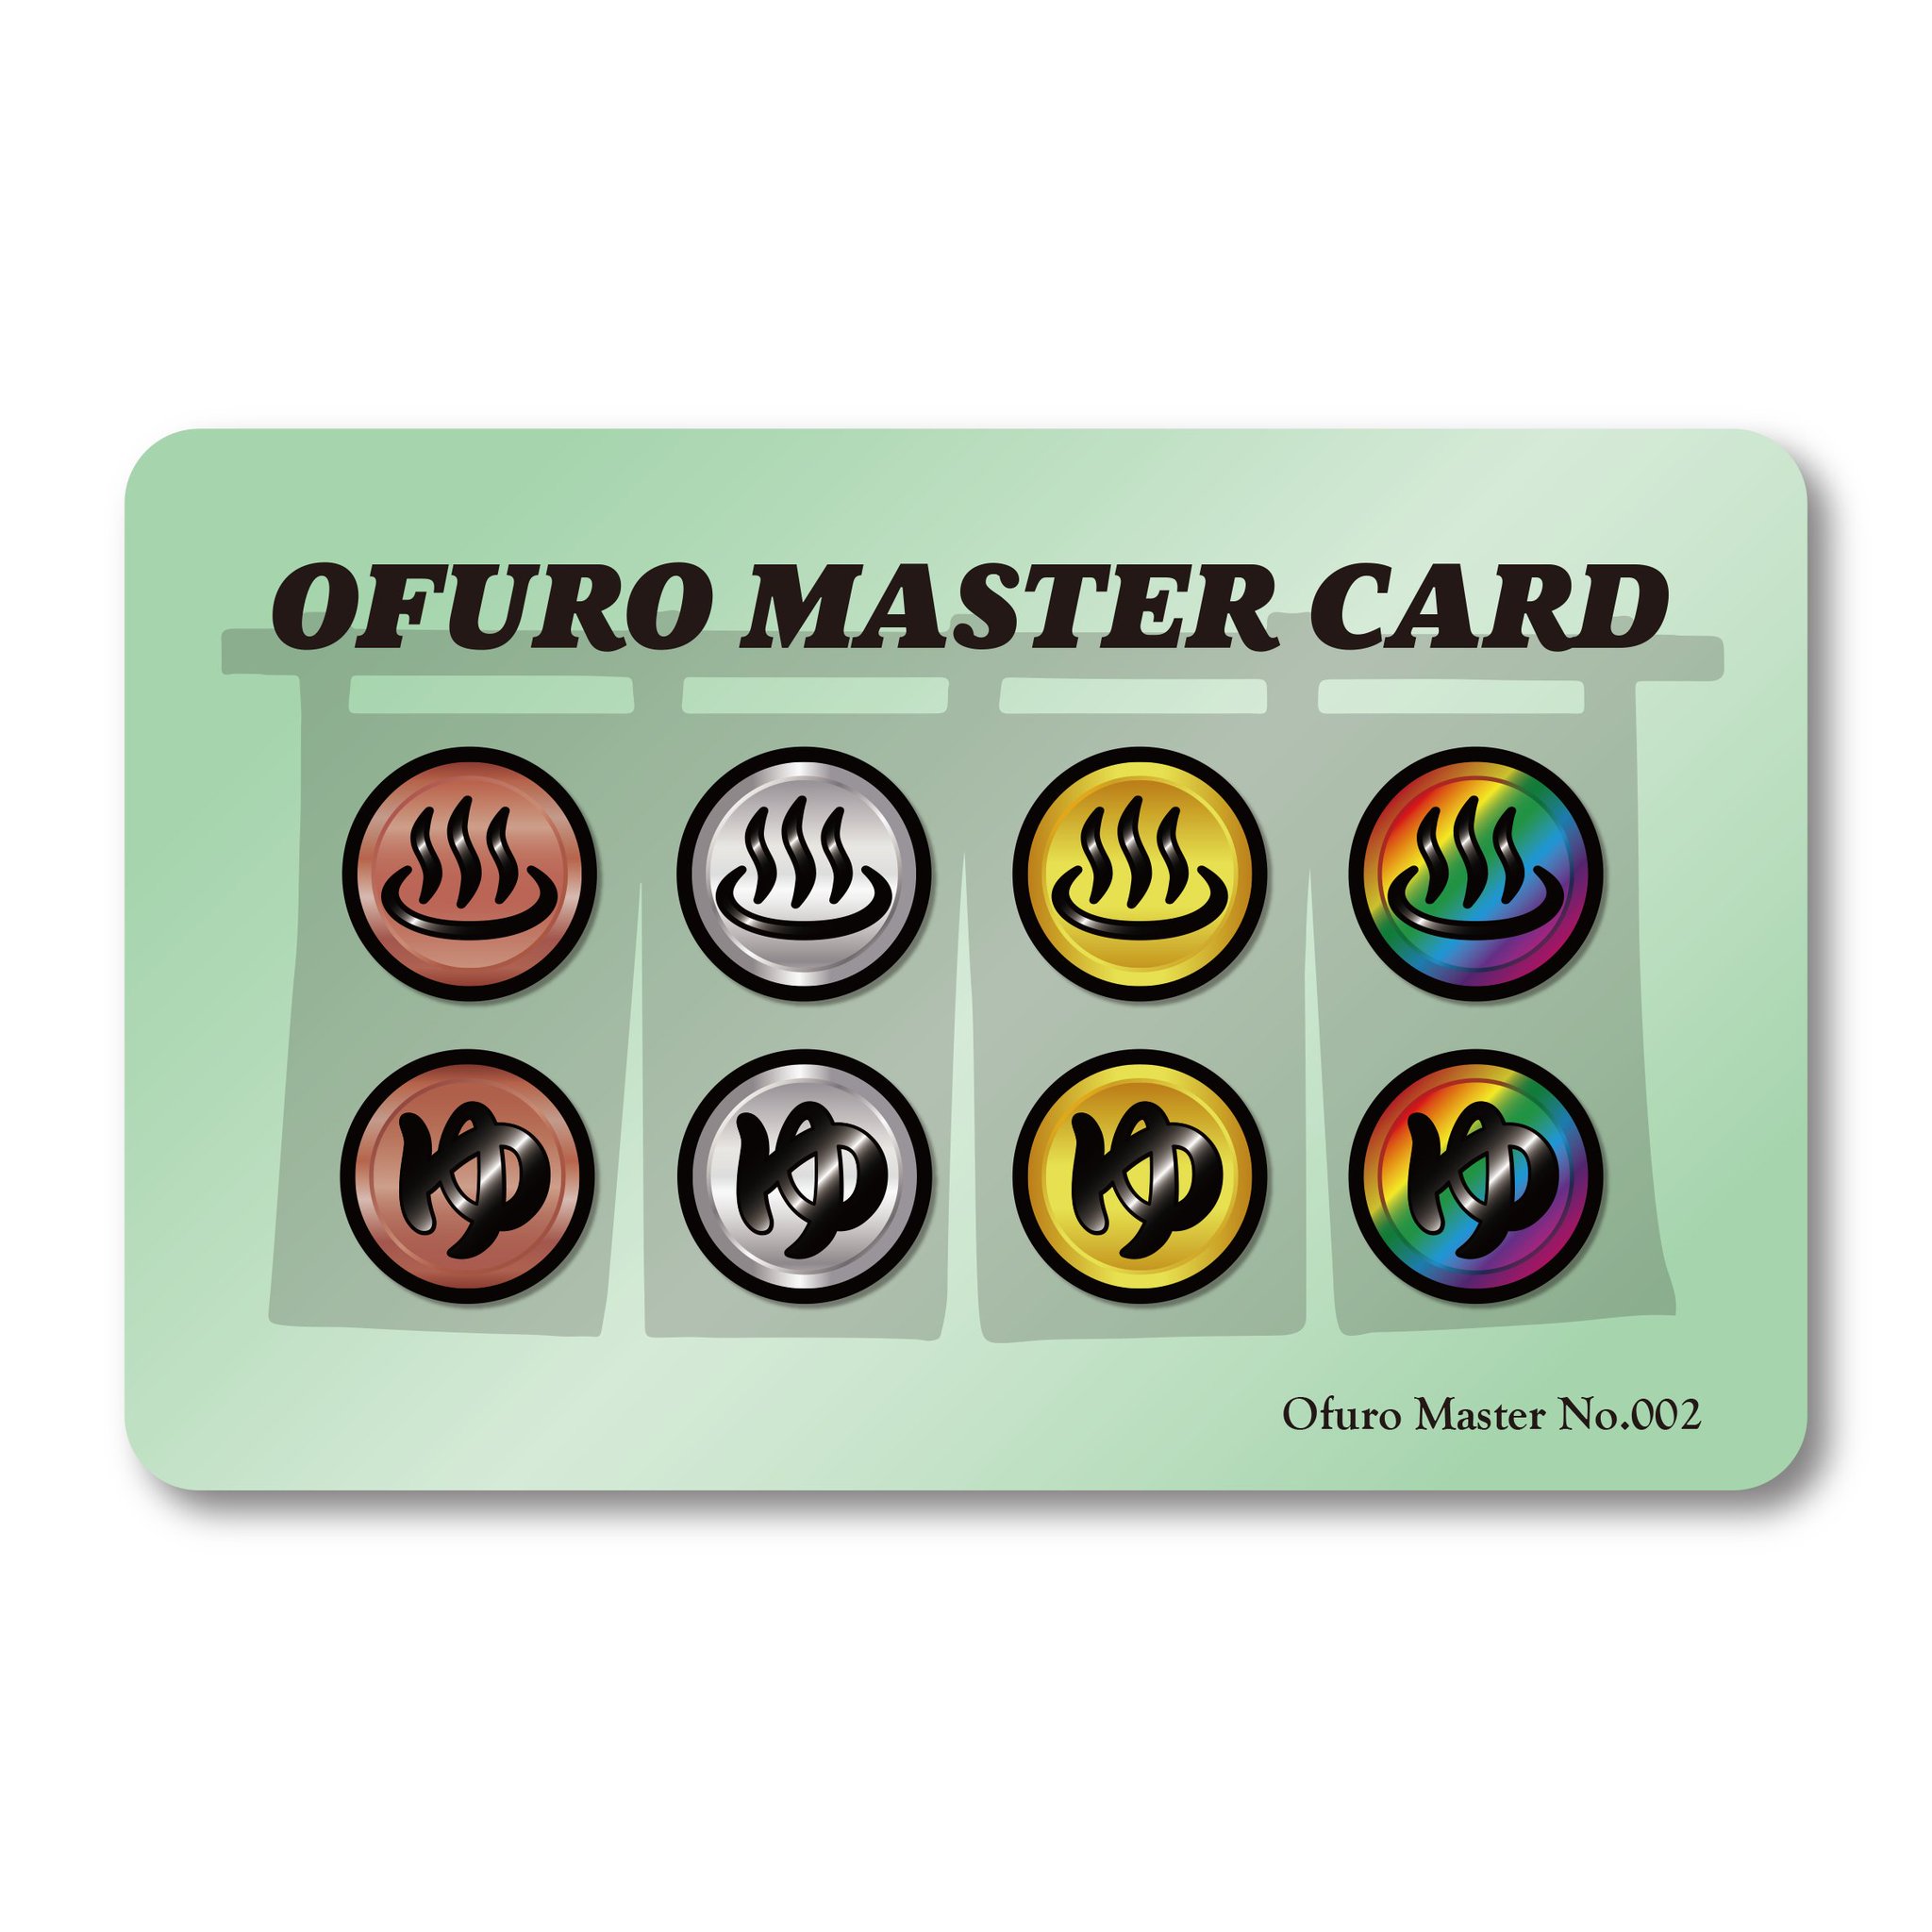 OFURO MASTER CARD 002